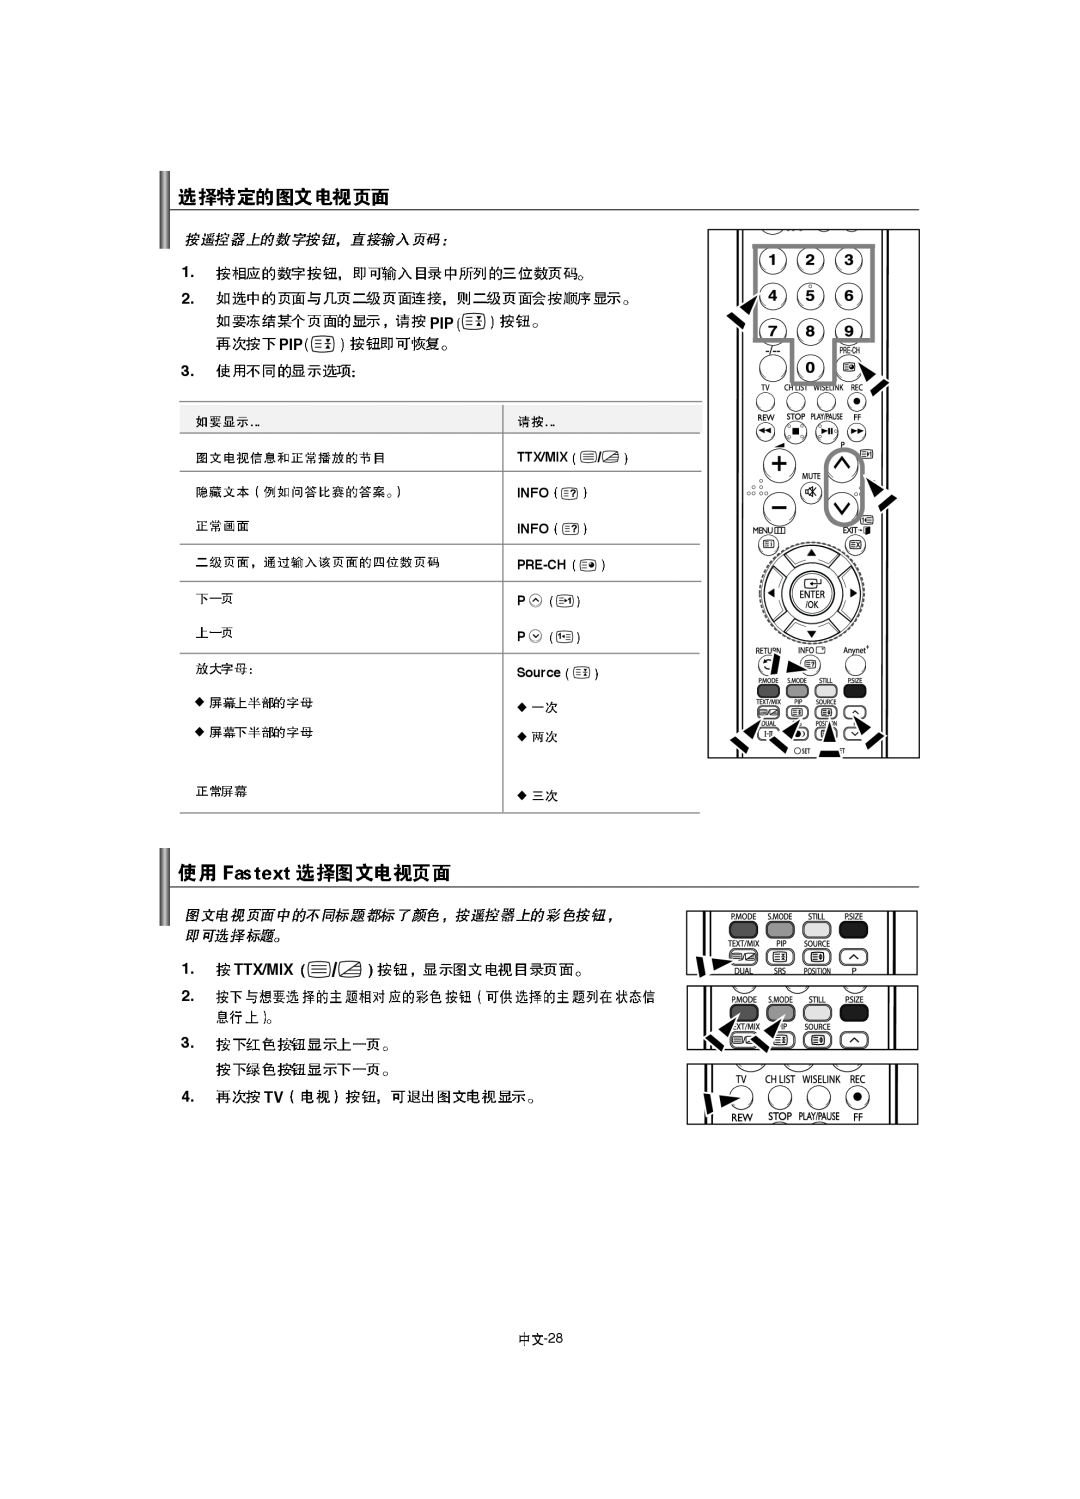 Samsung LA52F8, LA46F8, LA40F8 manual Info, Source, Ttx/Mix, Pre-Ch 